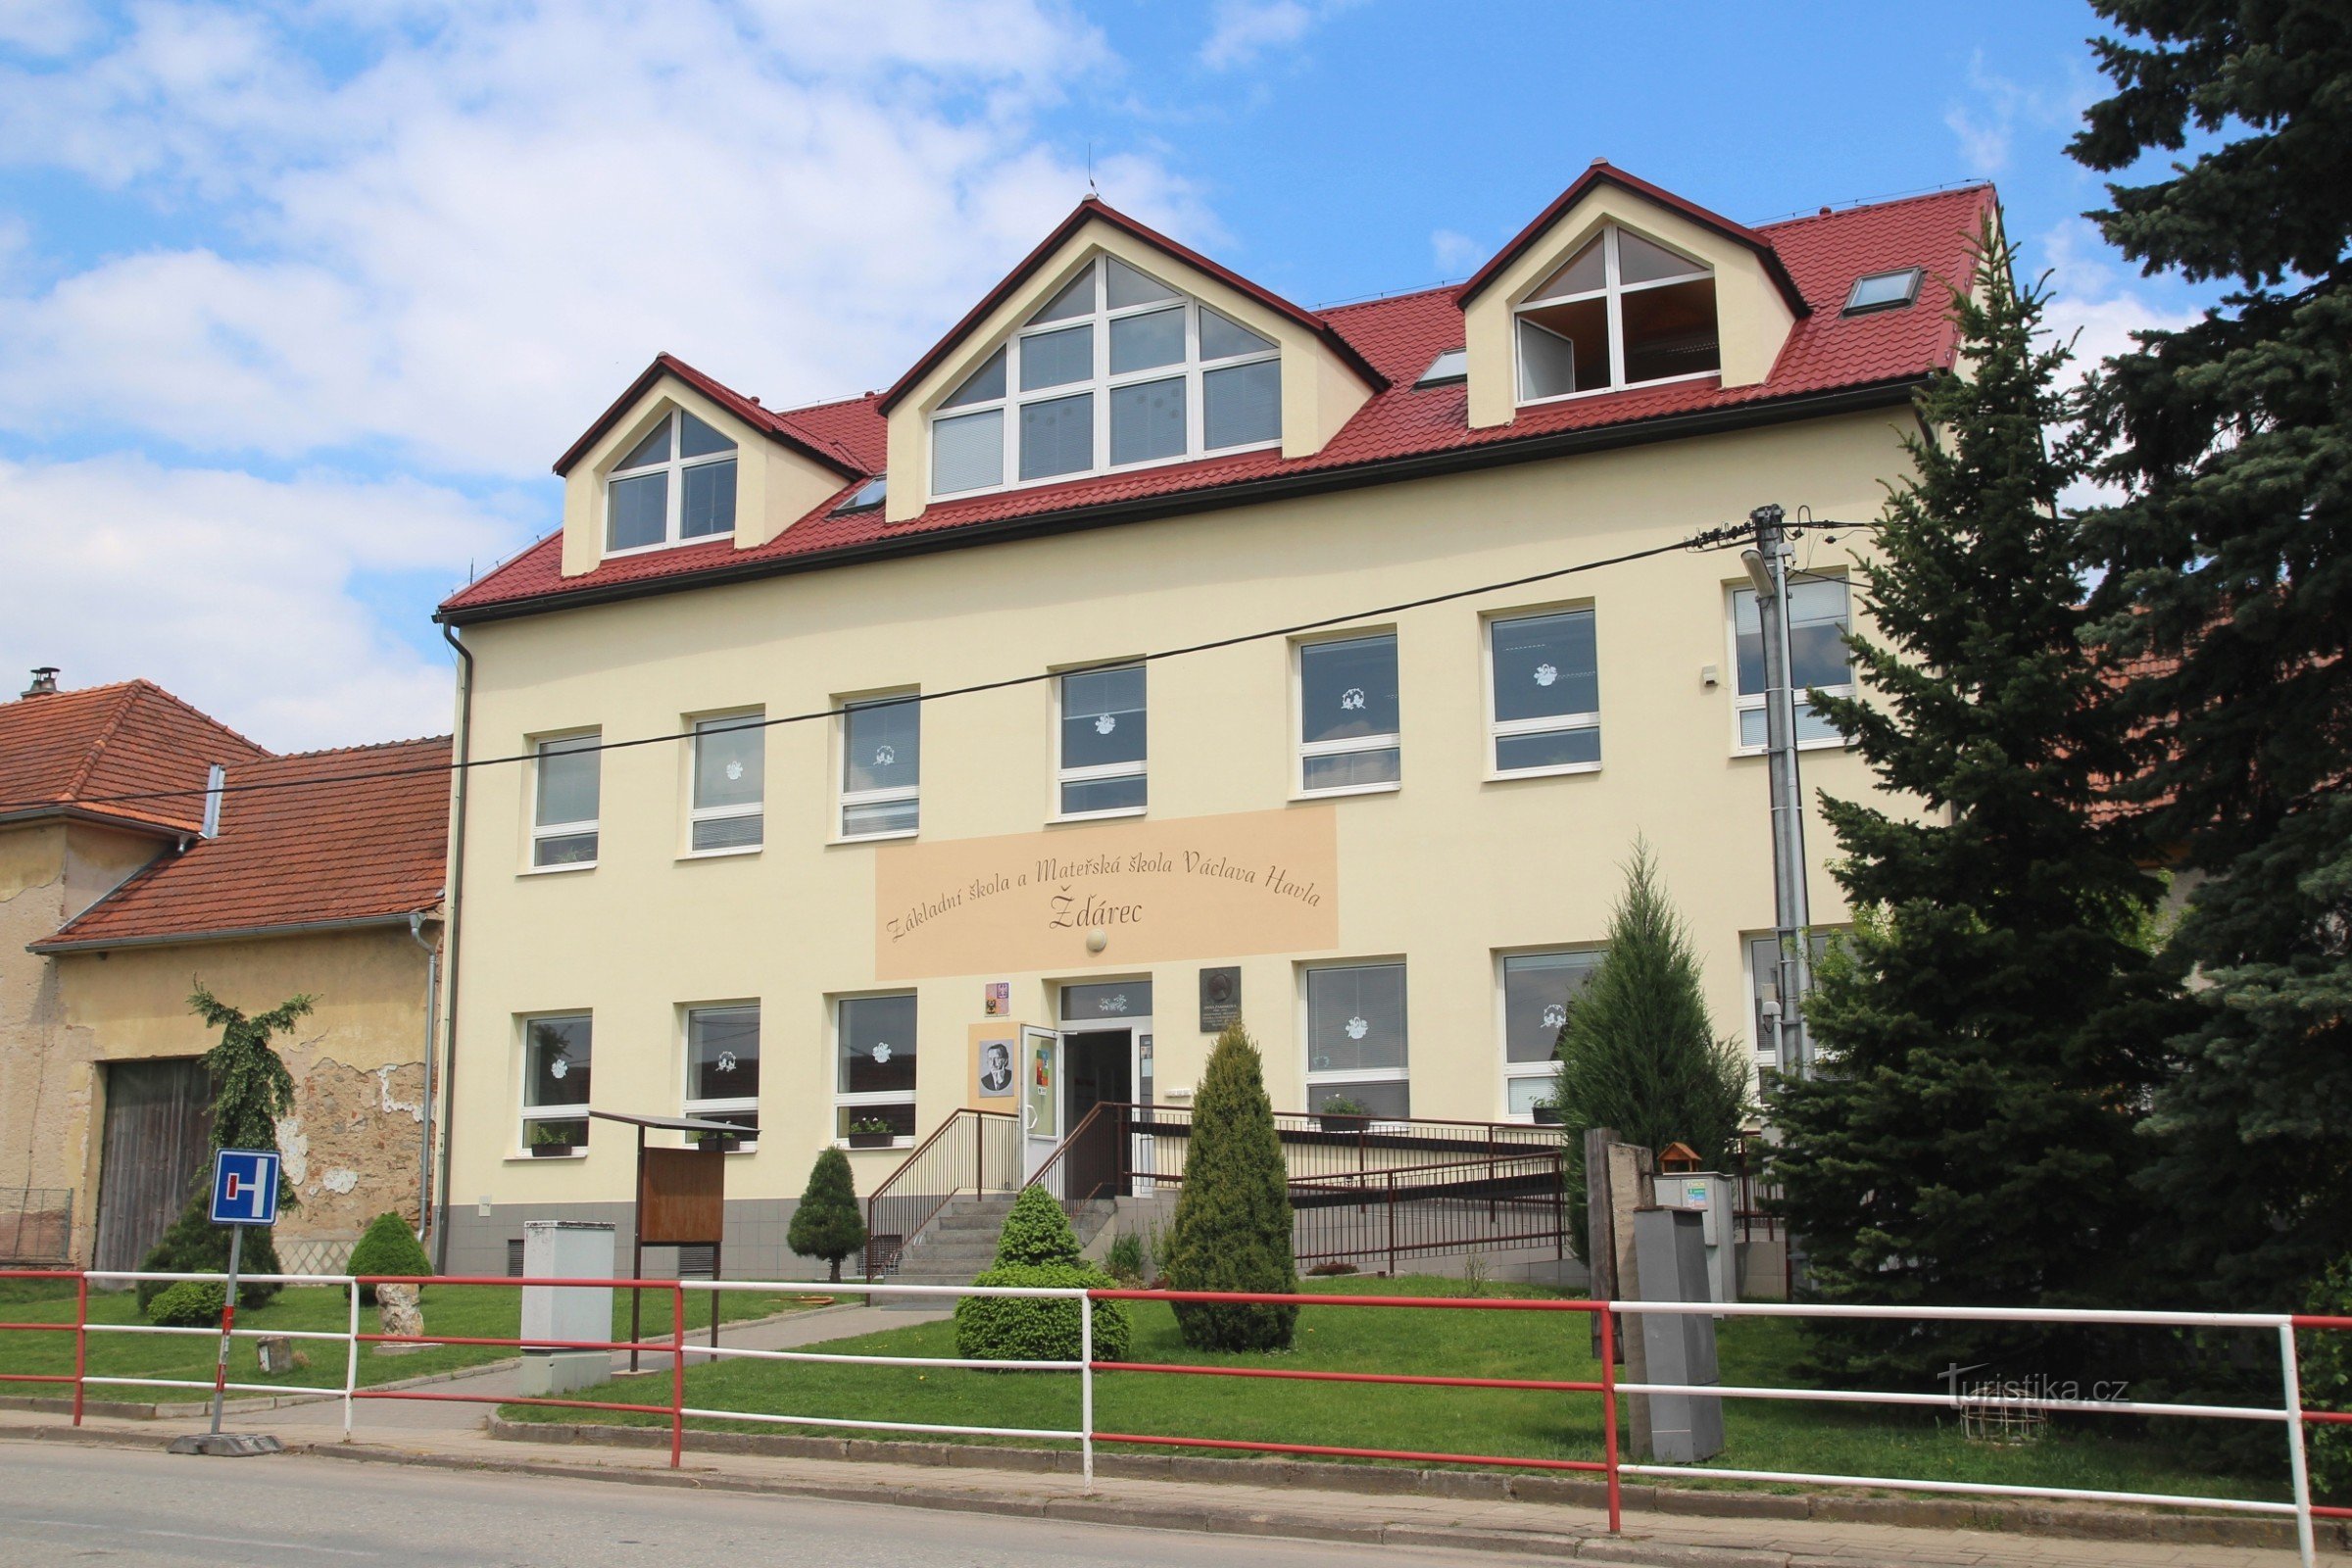 Václav Havel Elementary School in Žďárec